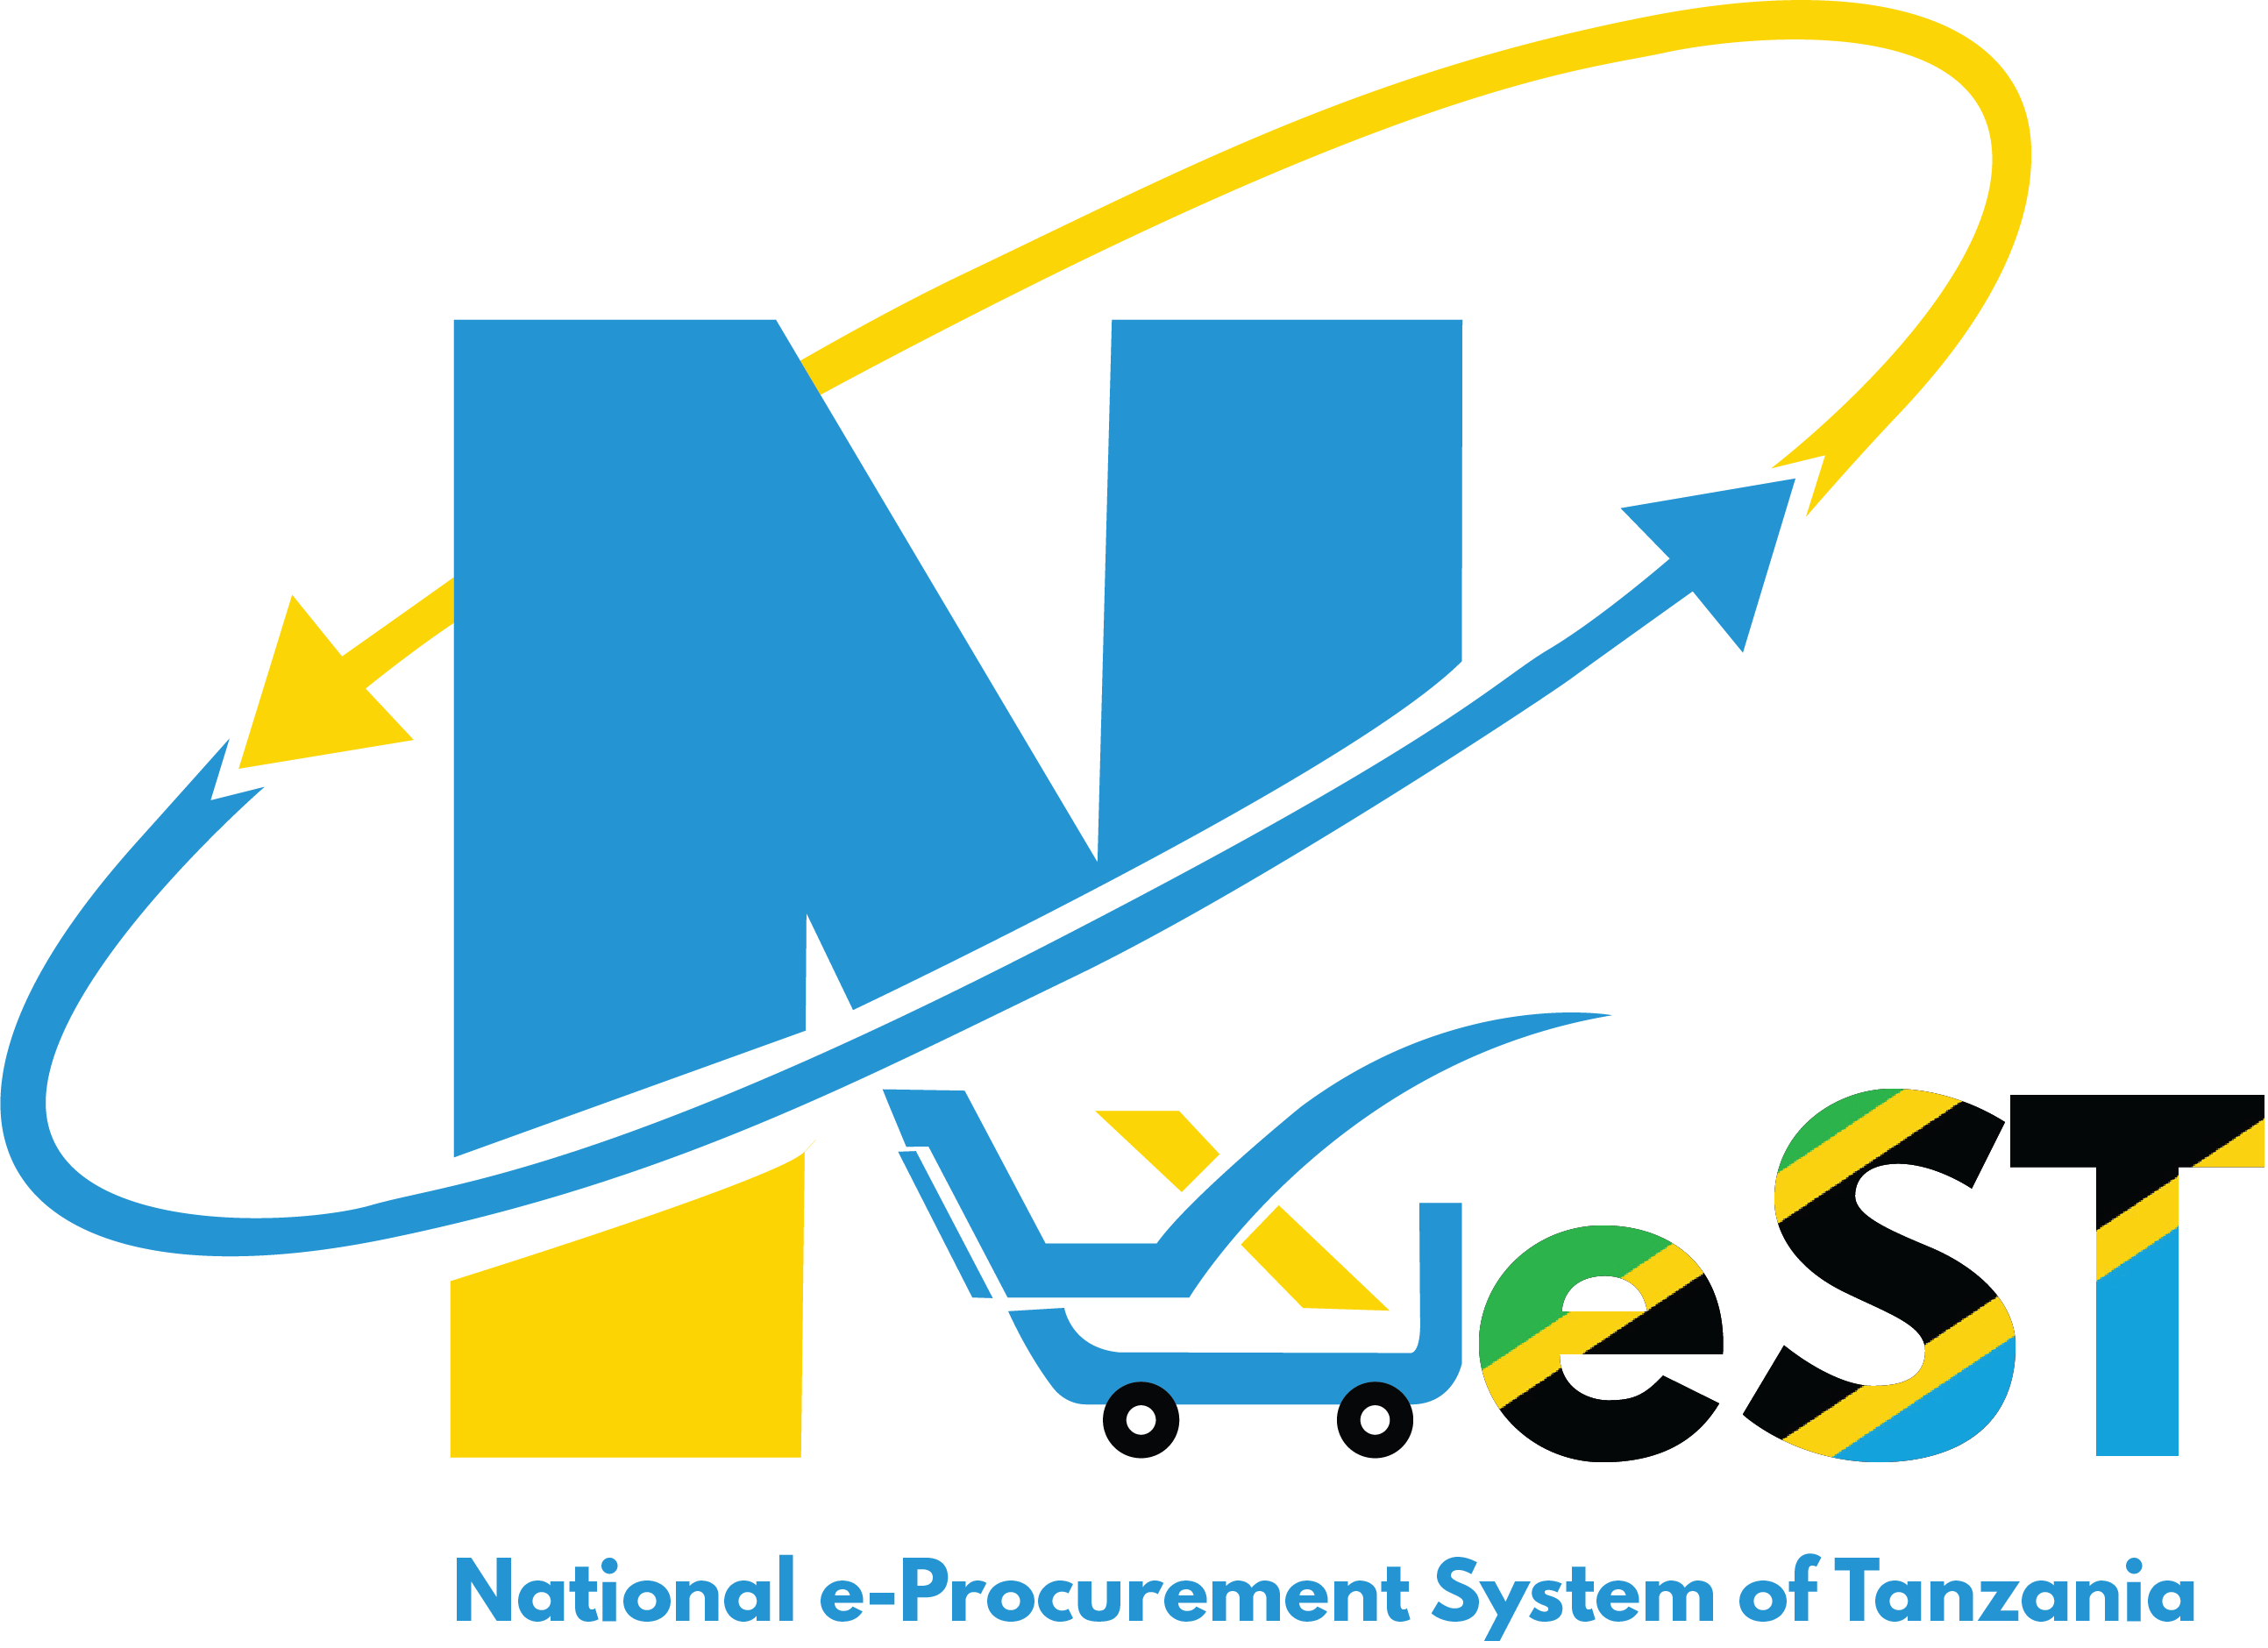 NeST procurement system in Tanzania Registration